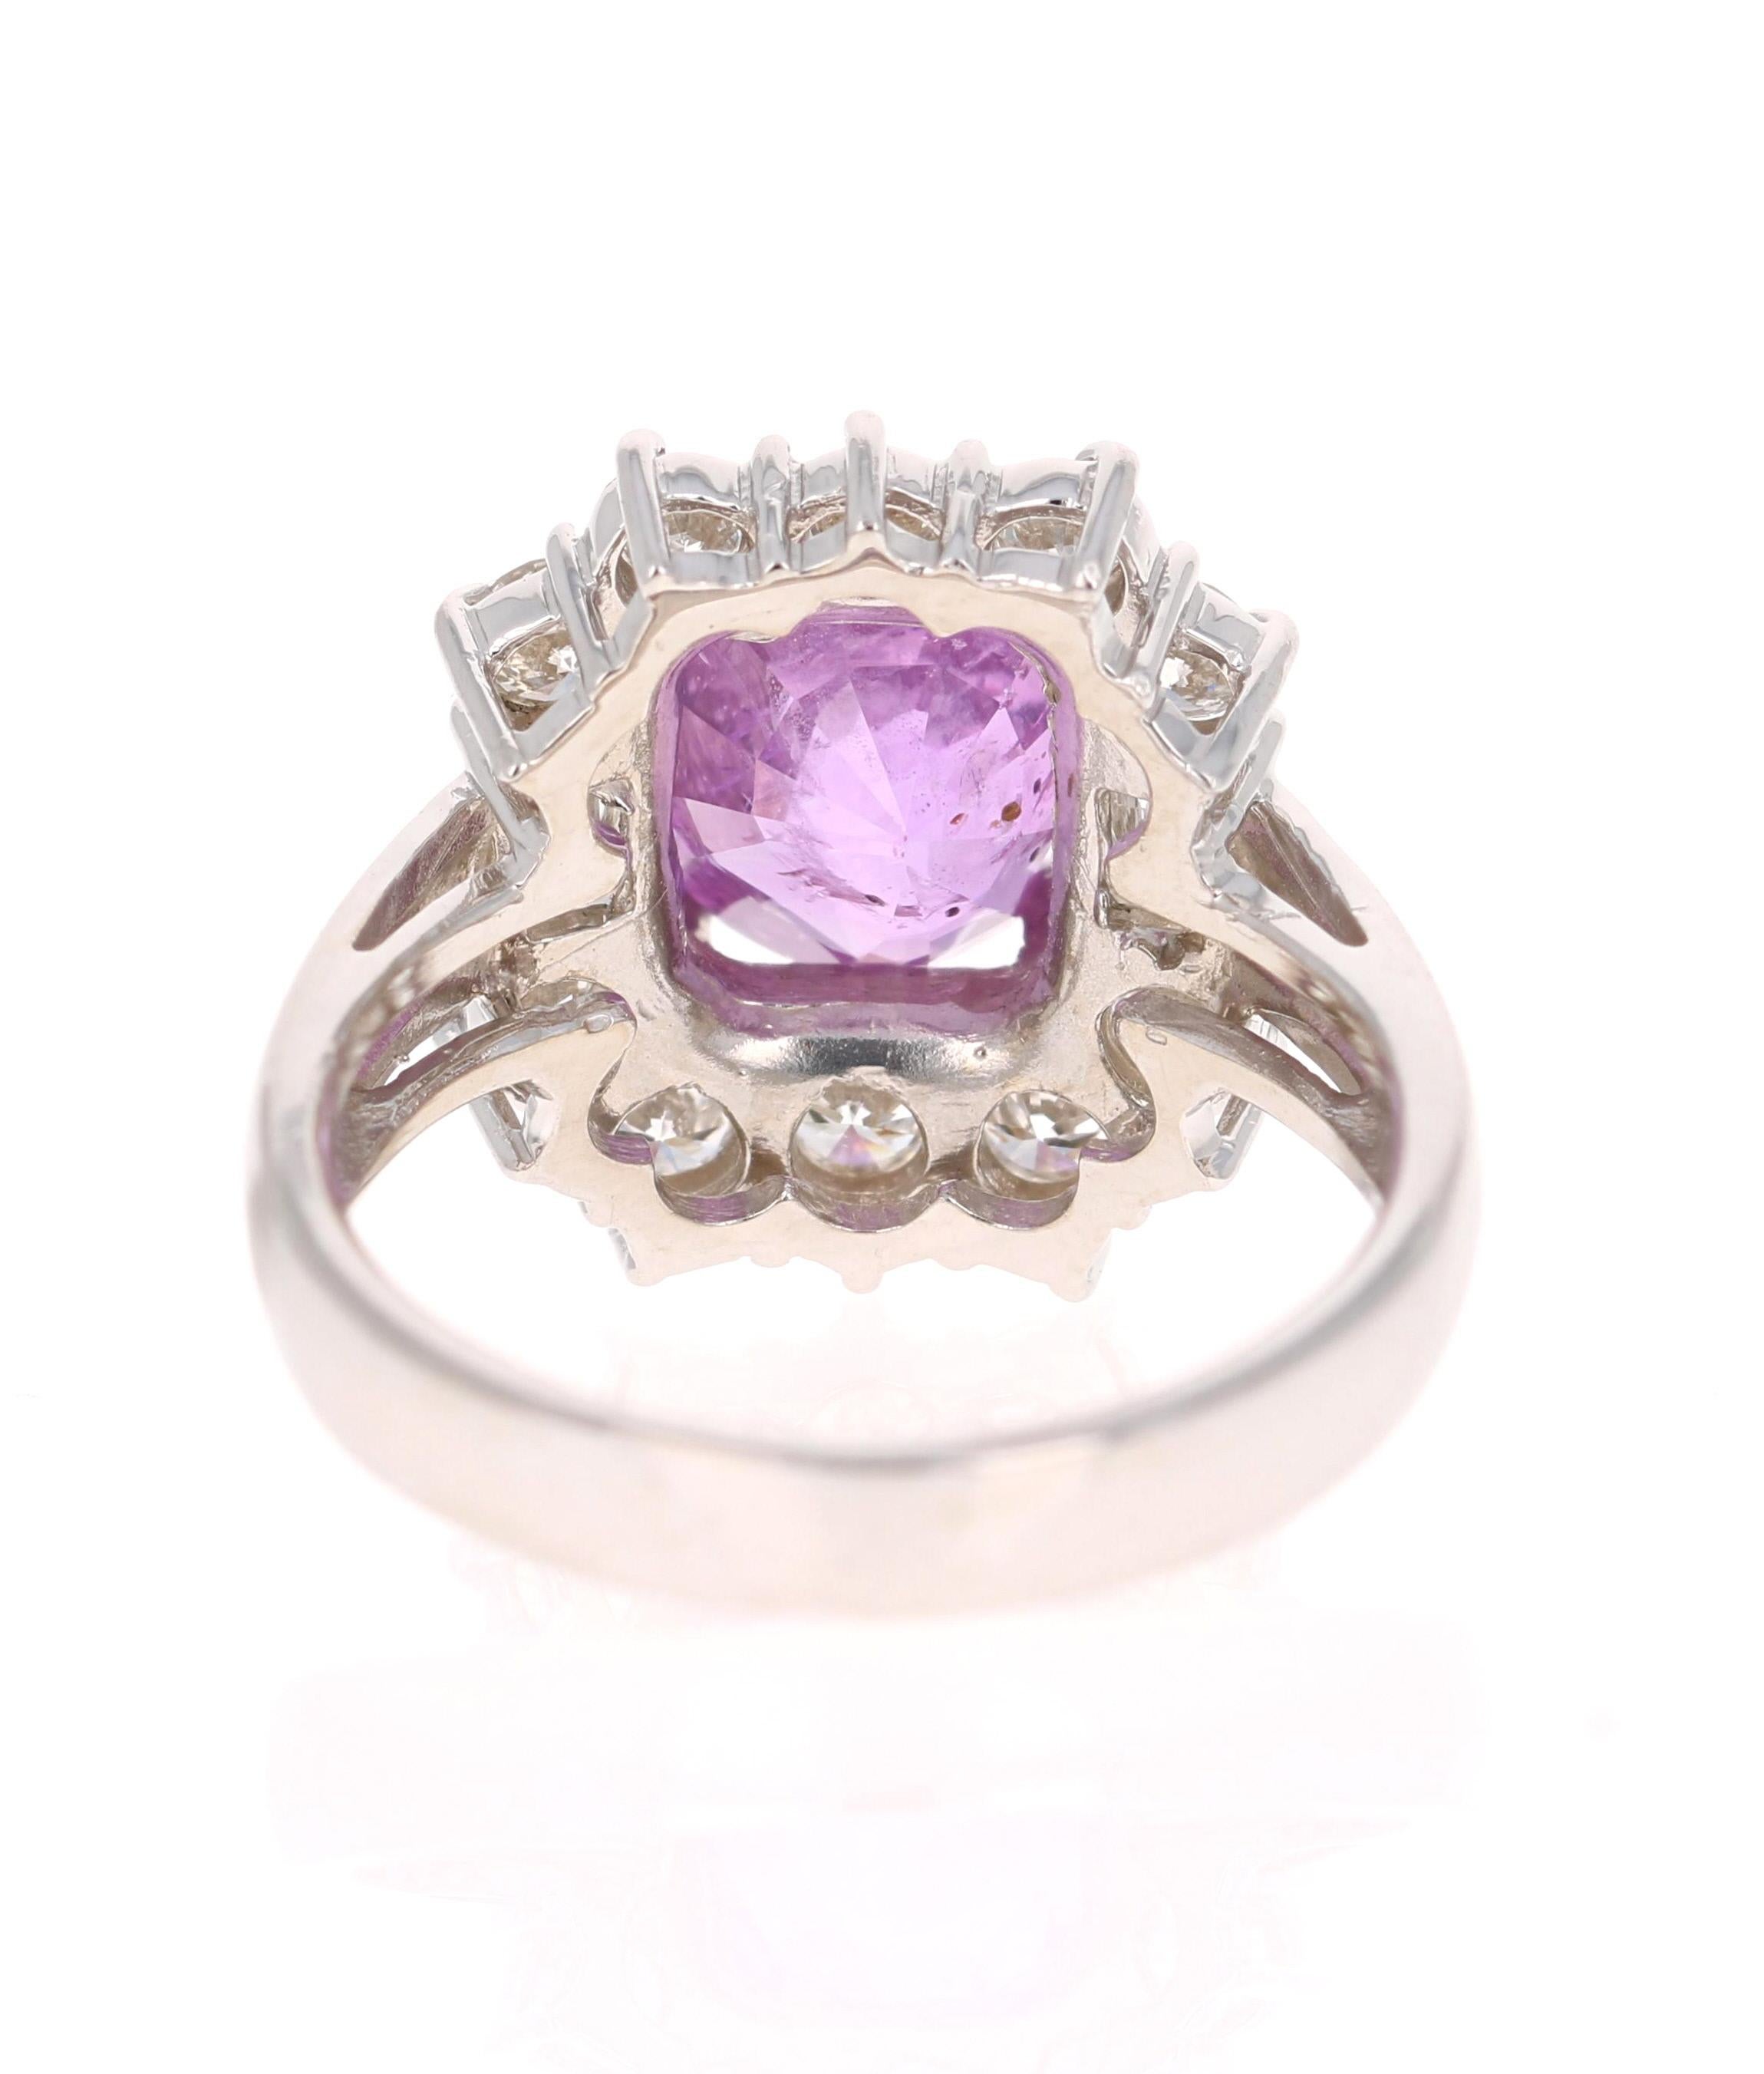 Oval Cut 4.61 Carat Unheated Pink Sapphire Diamond 14 Karat White Gold Ring GIA Certified